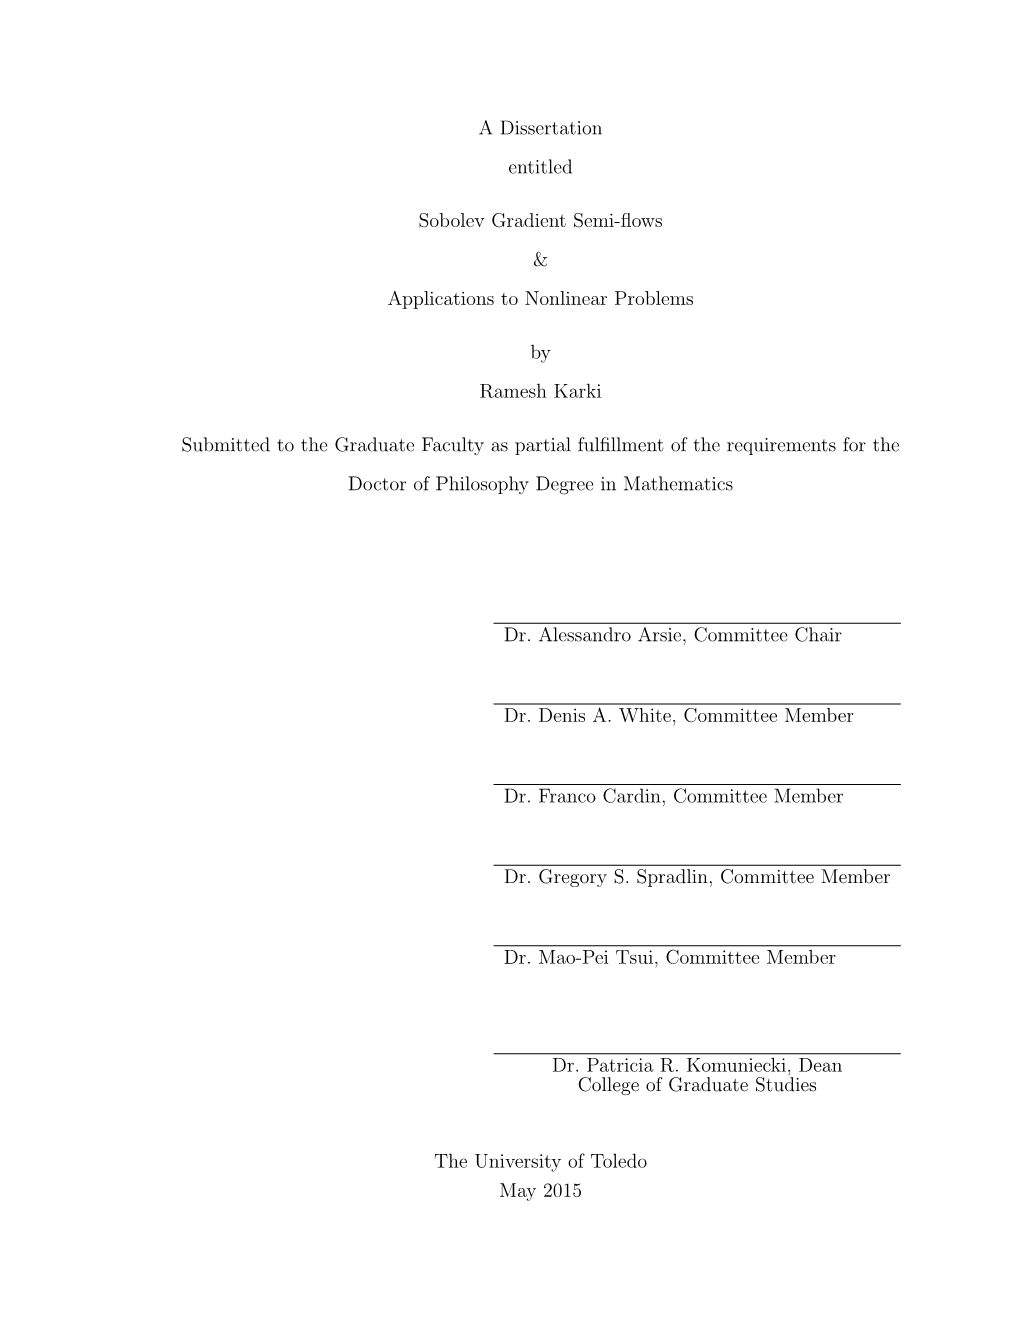 A Dissertation Entitled Sobolev Gradient Semi-Flows & Applications